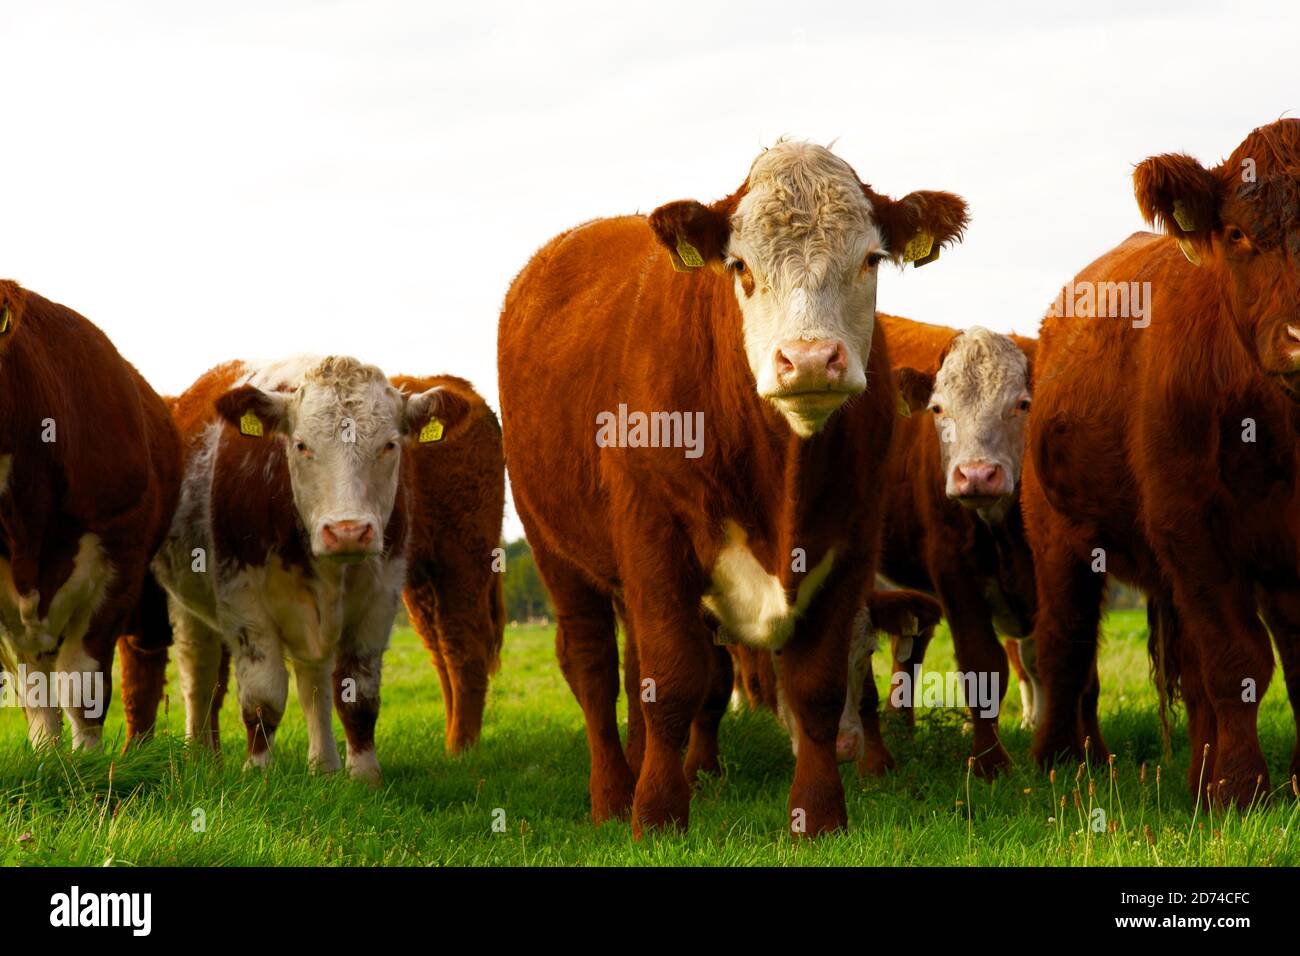 Kühe grasen auf dem Feld in den Niederlanden. Horizontale Komposition, Vollformat, Kopierbereich, Farbbild. Stockfoto